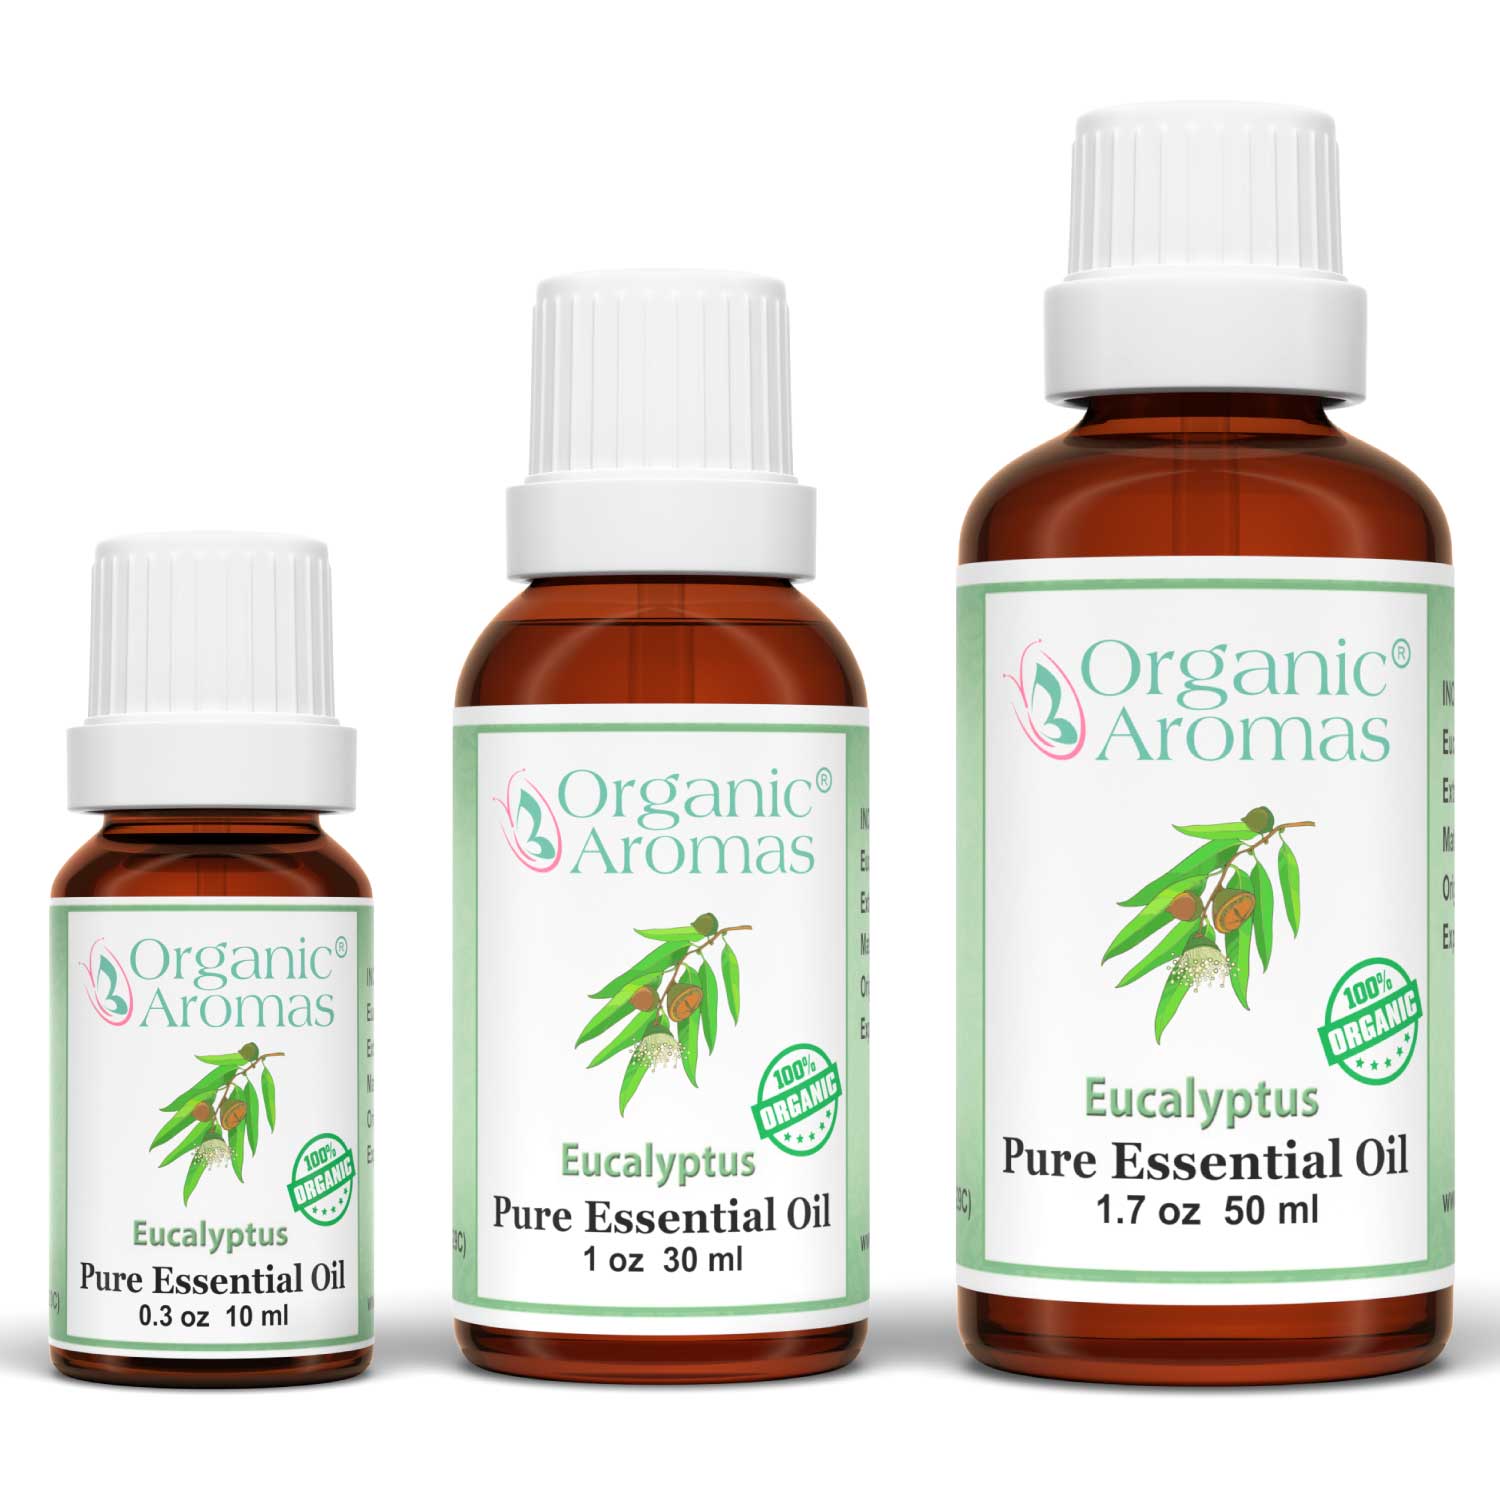 Eucalyptus Organic Essential Oil | Benefits and Uses | Organic Aromas®